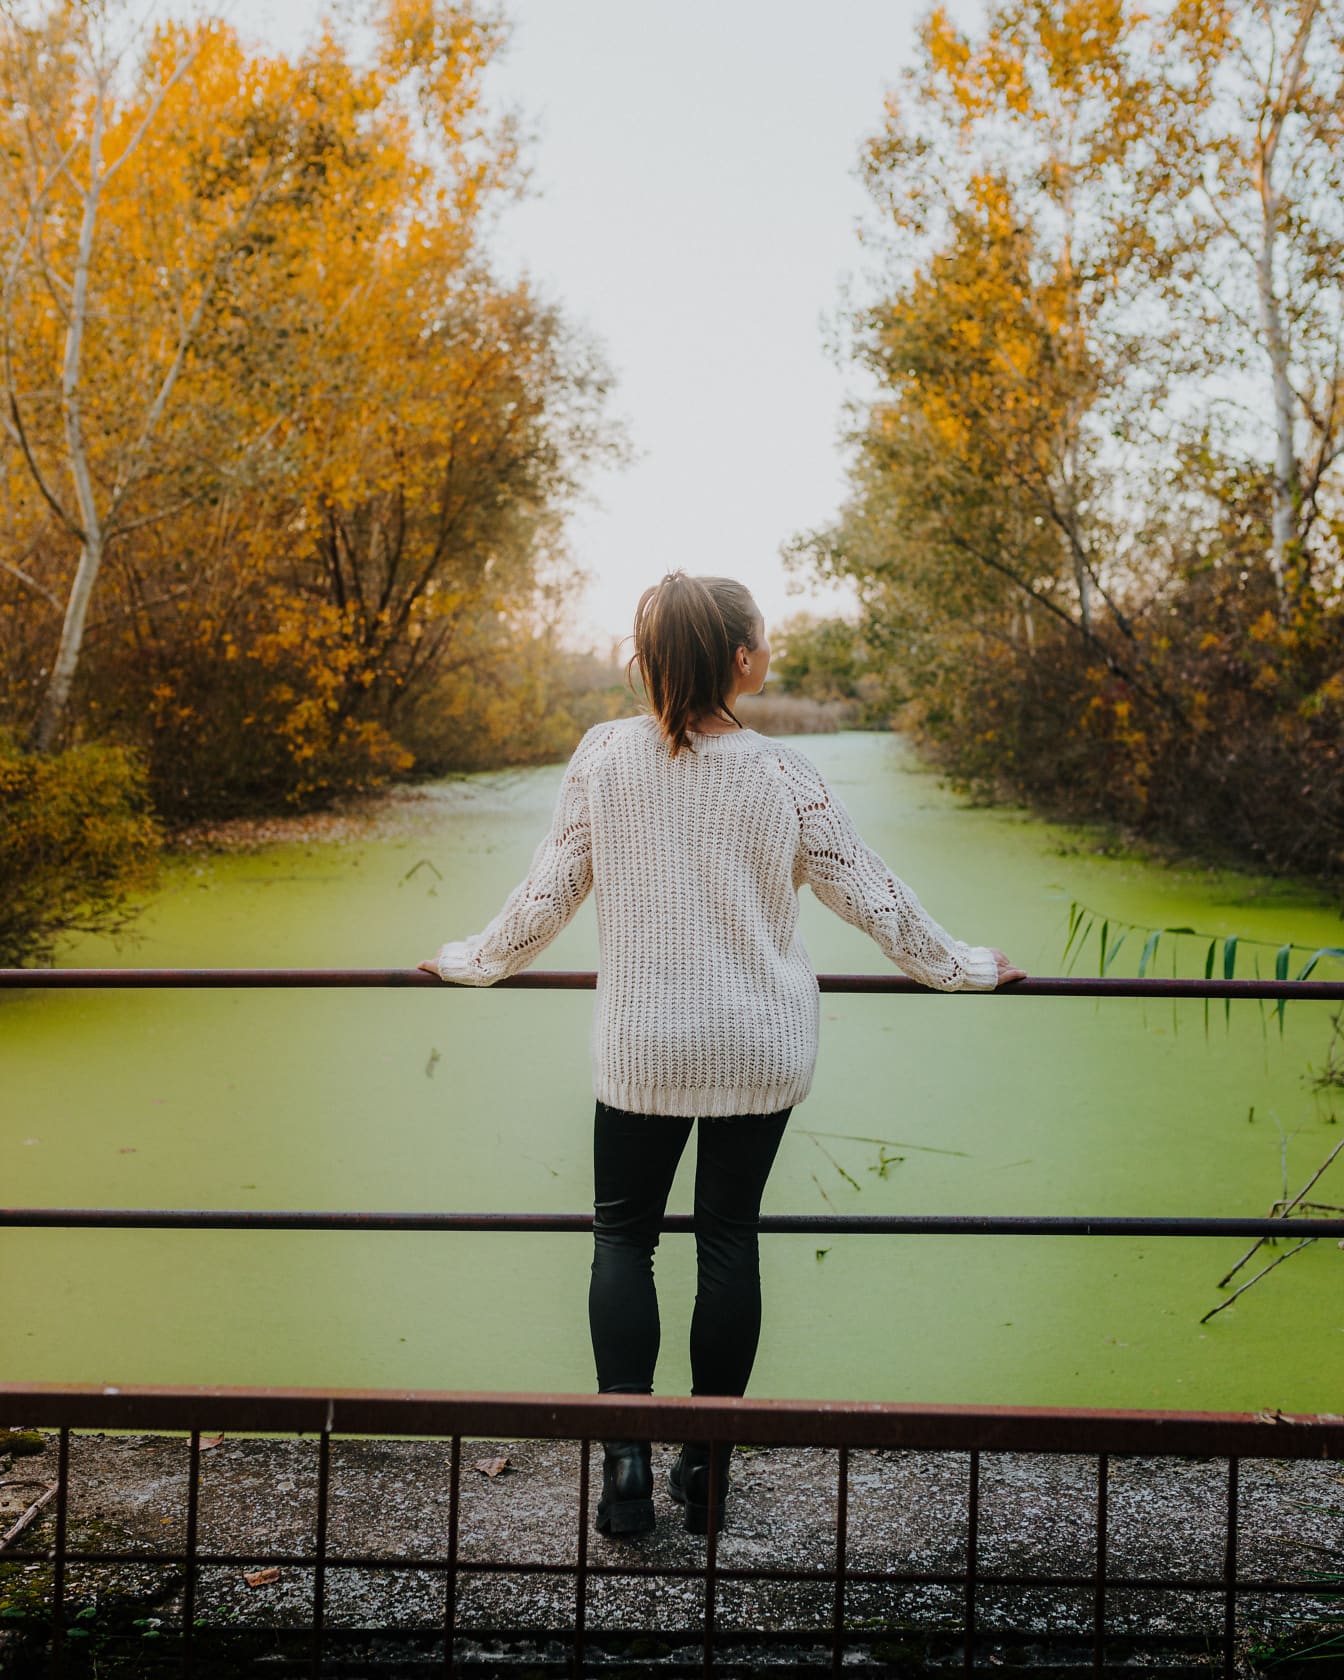 Fotomodelka pózuje vo svetri na močiarnom moste